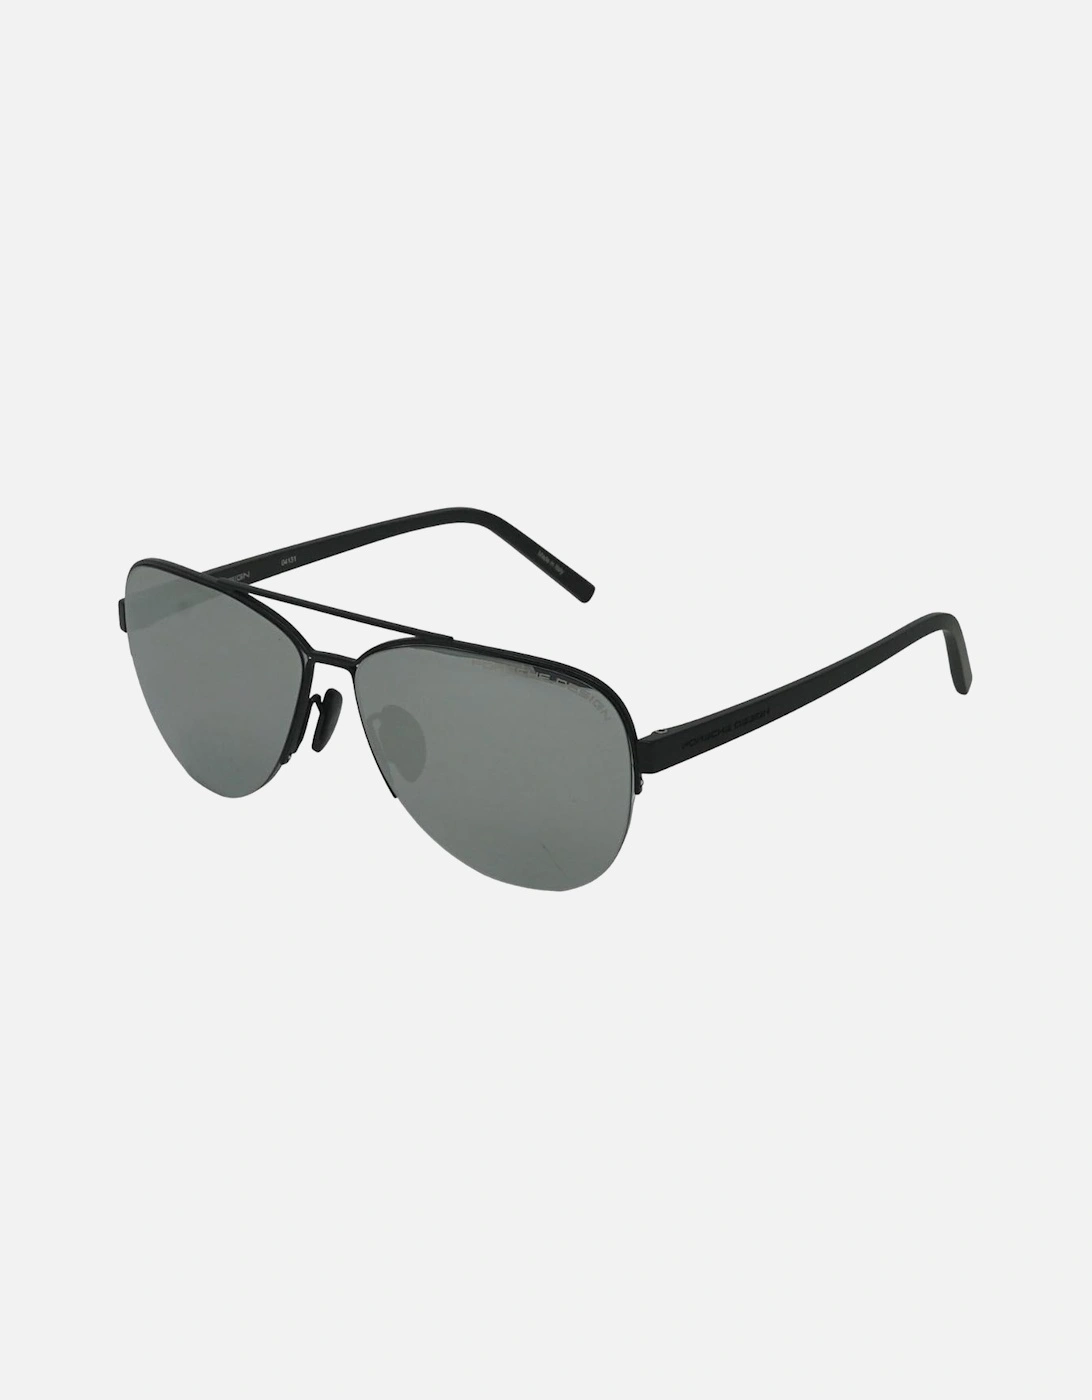 Porsche Design P8676 A Black Sunglasses